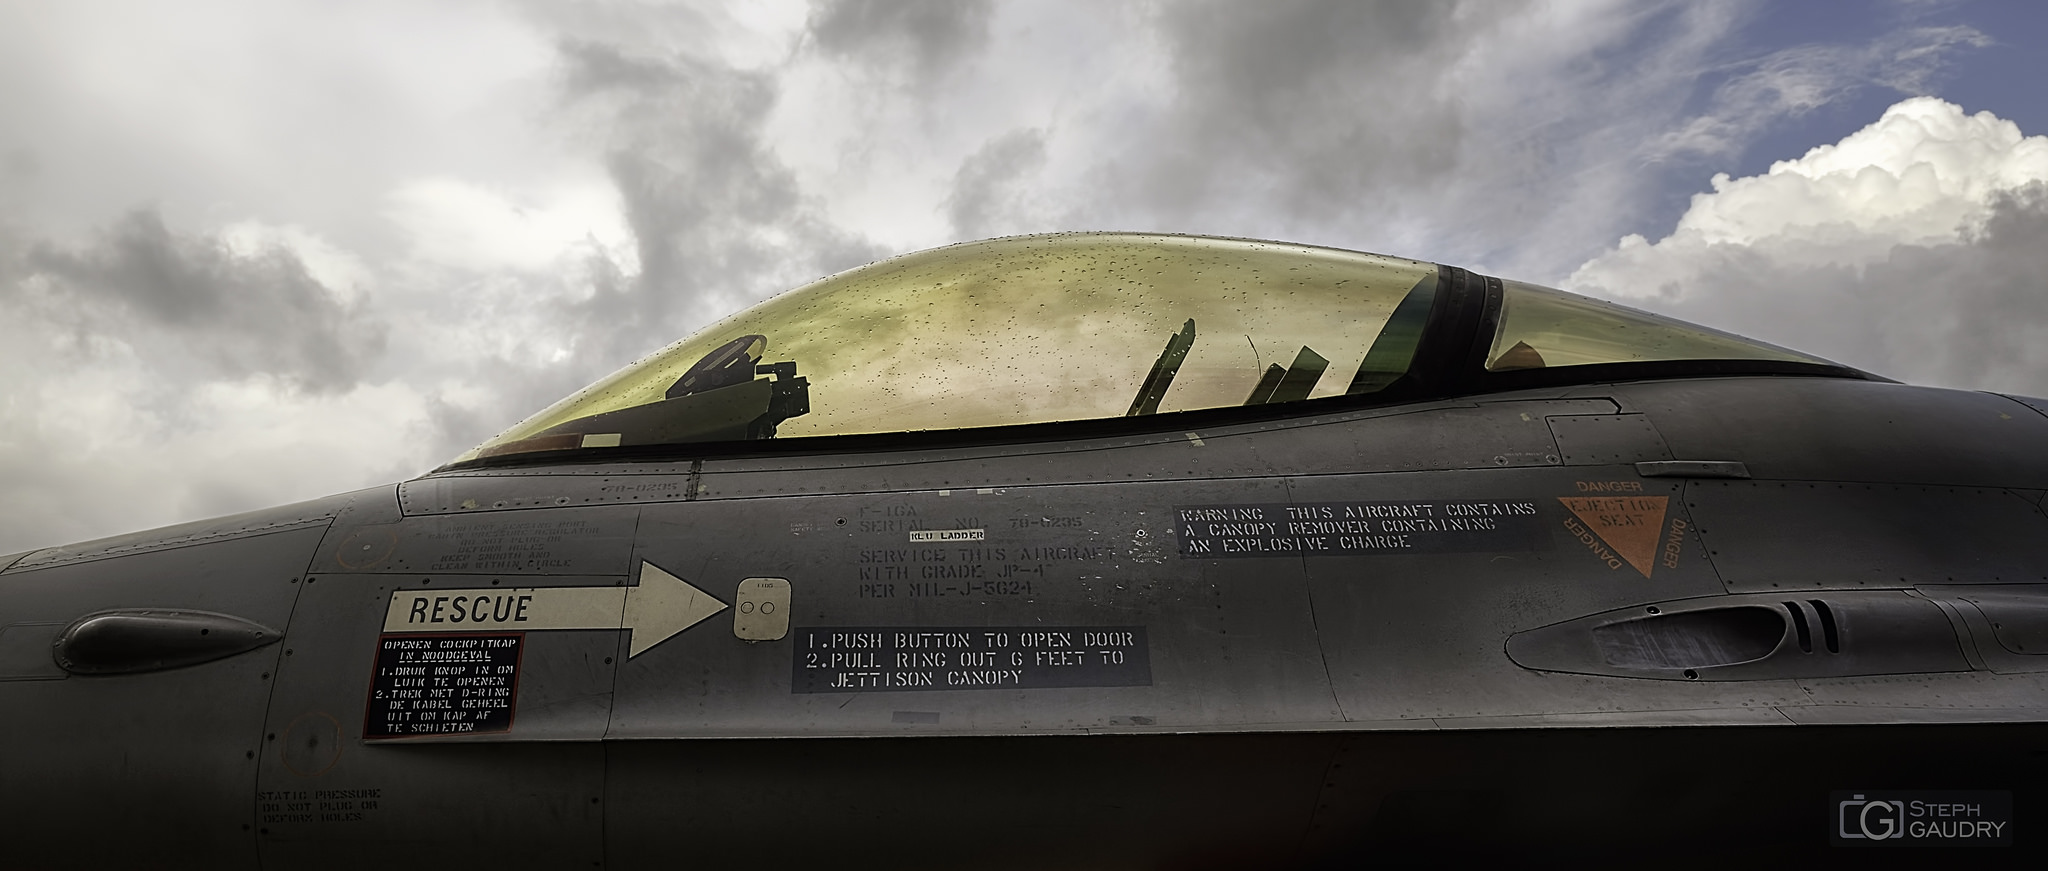 EHEH Airport / F-16 cockpit v2